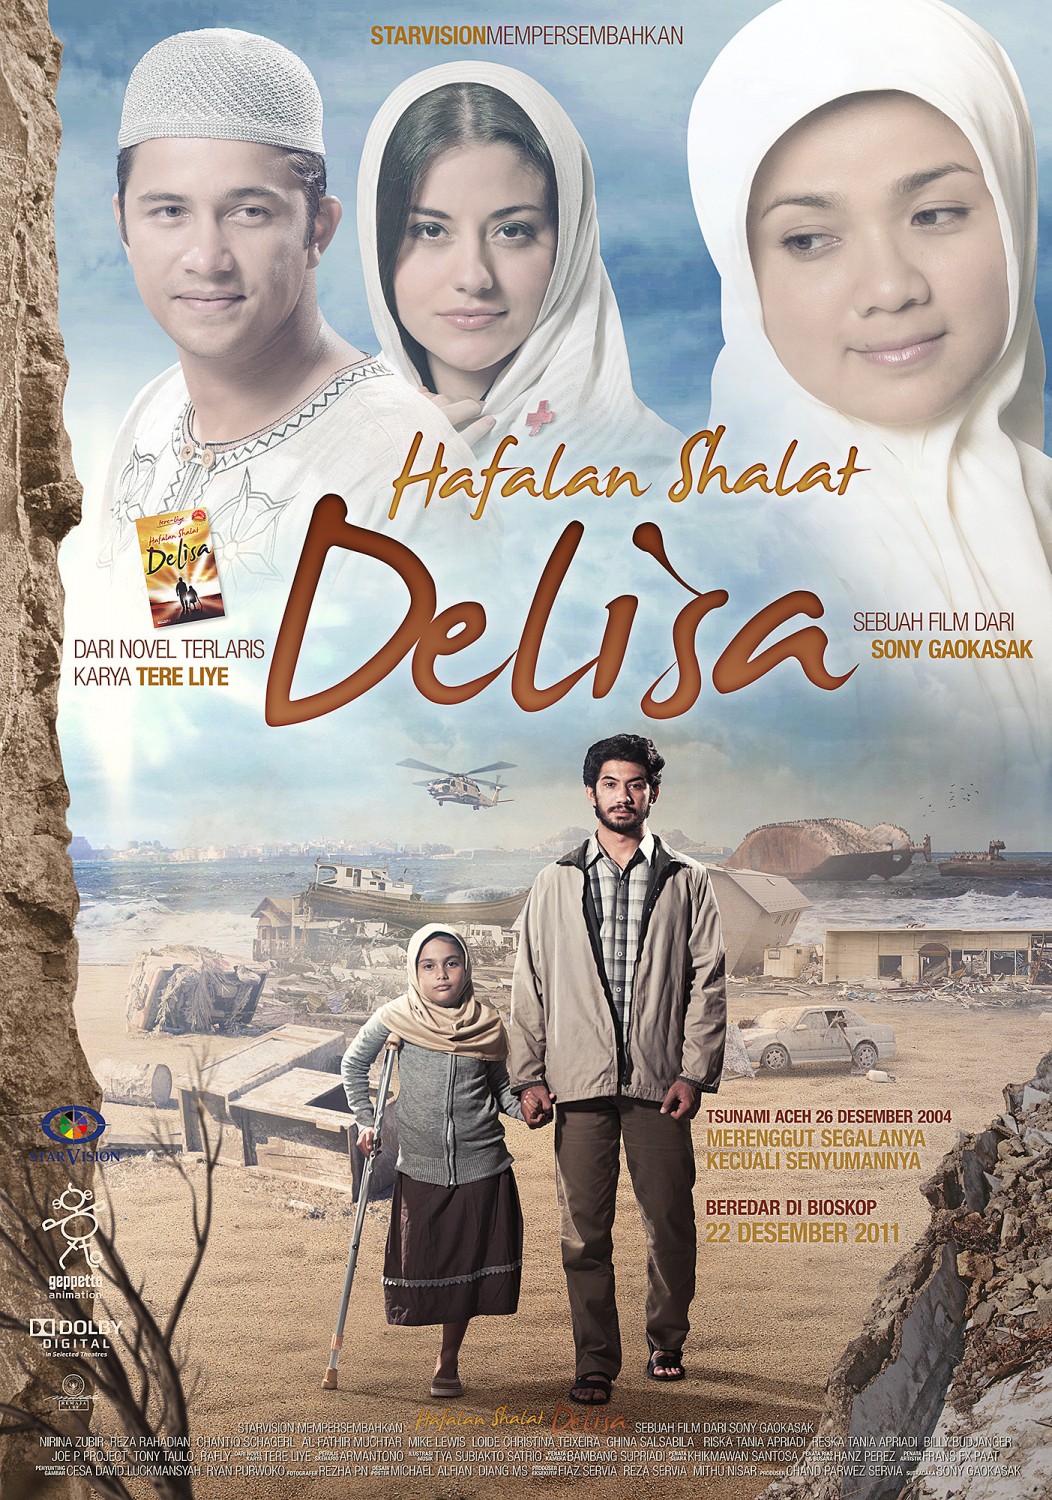 Extra Large Movie Poster Image for Hafalan shalat Delisa (#1 of 2)